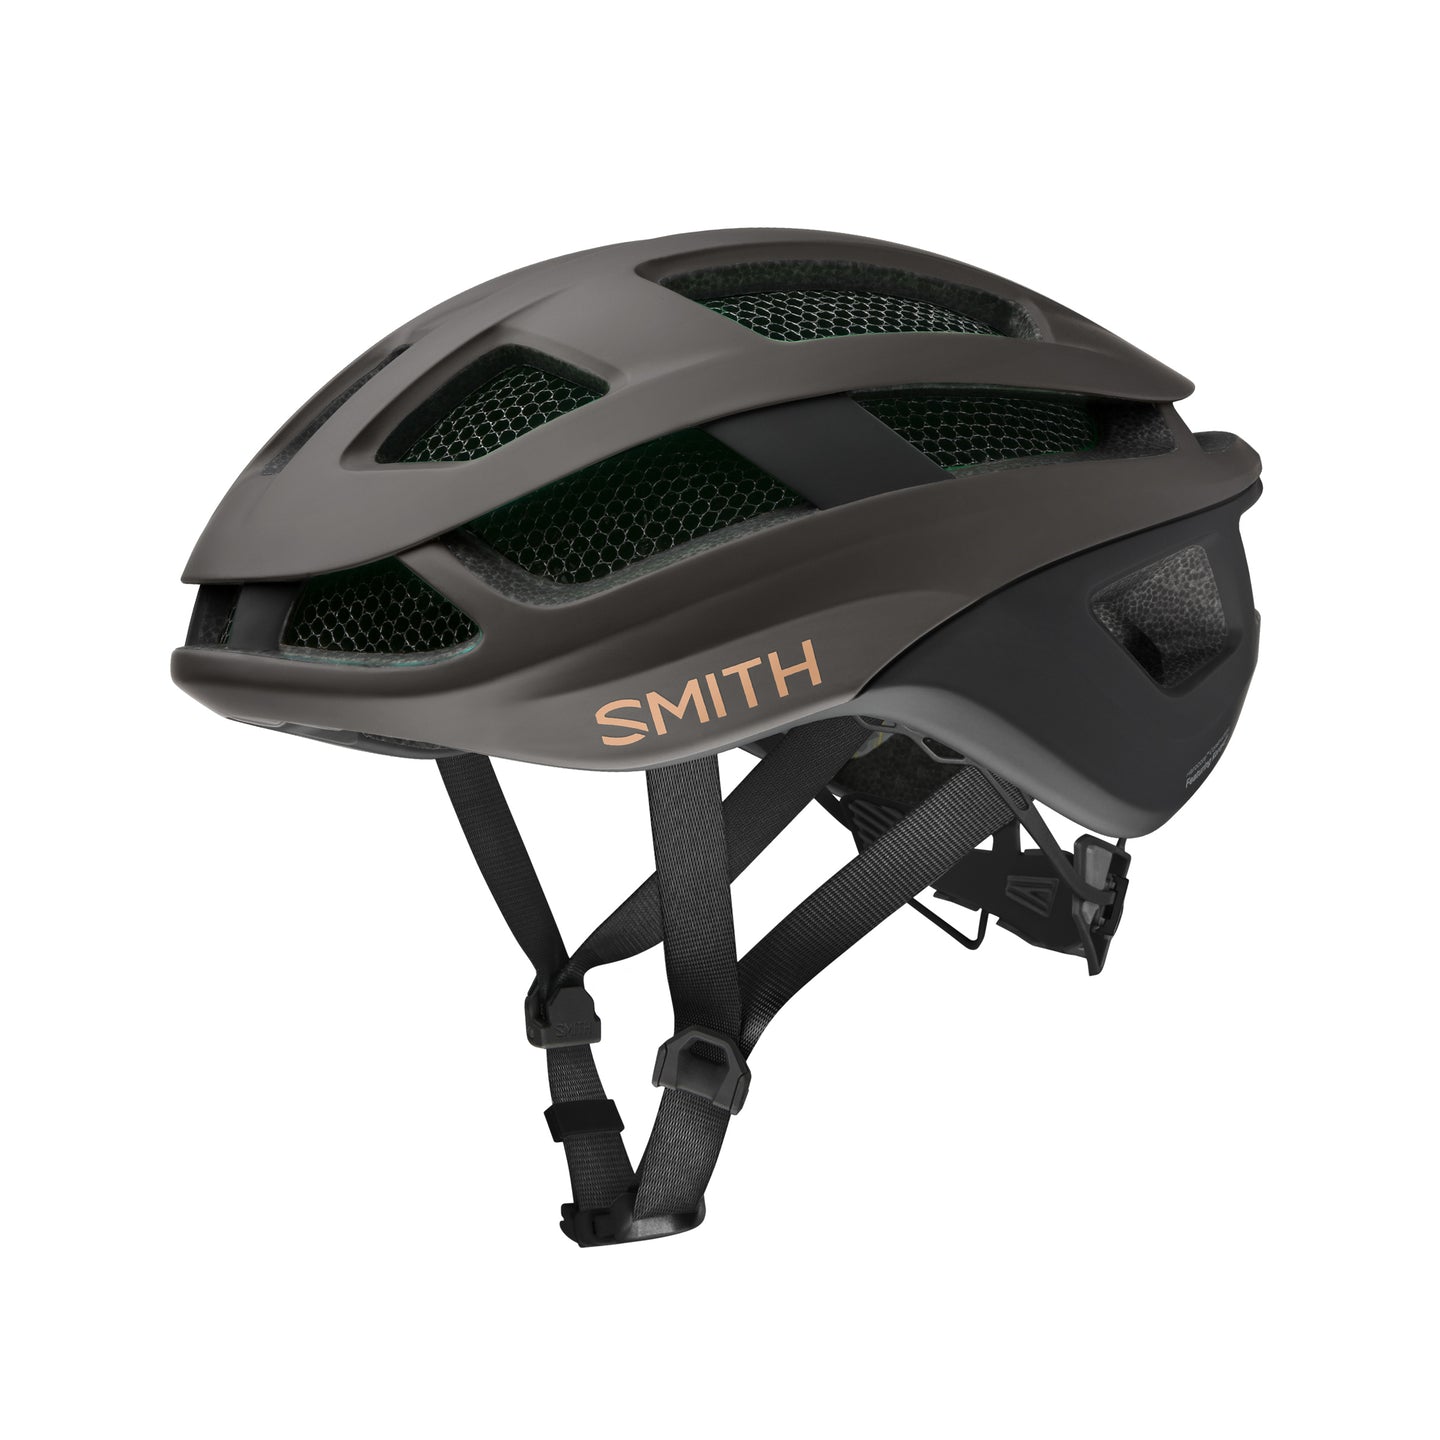 The Smith Trace Road Bike Helmet